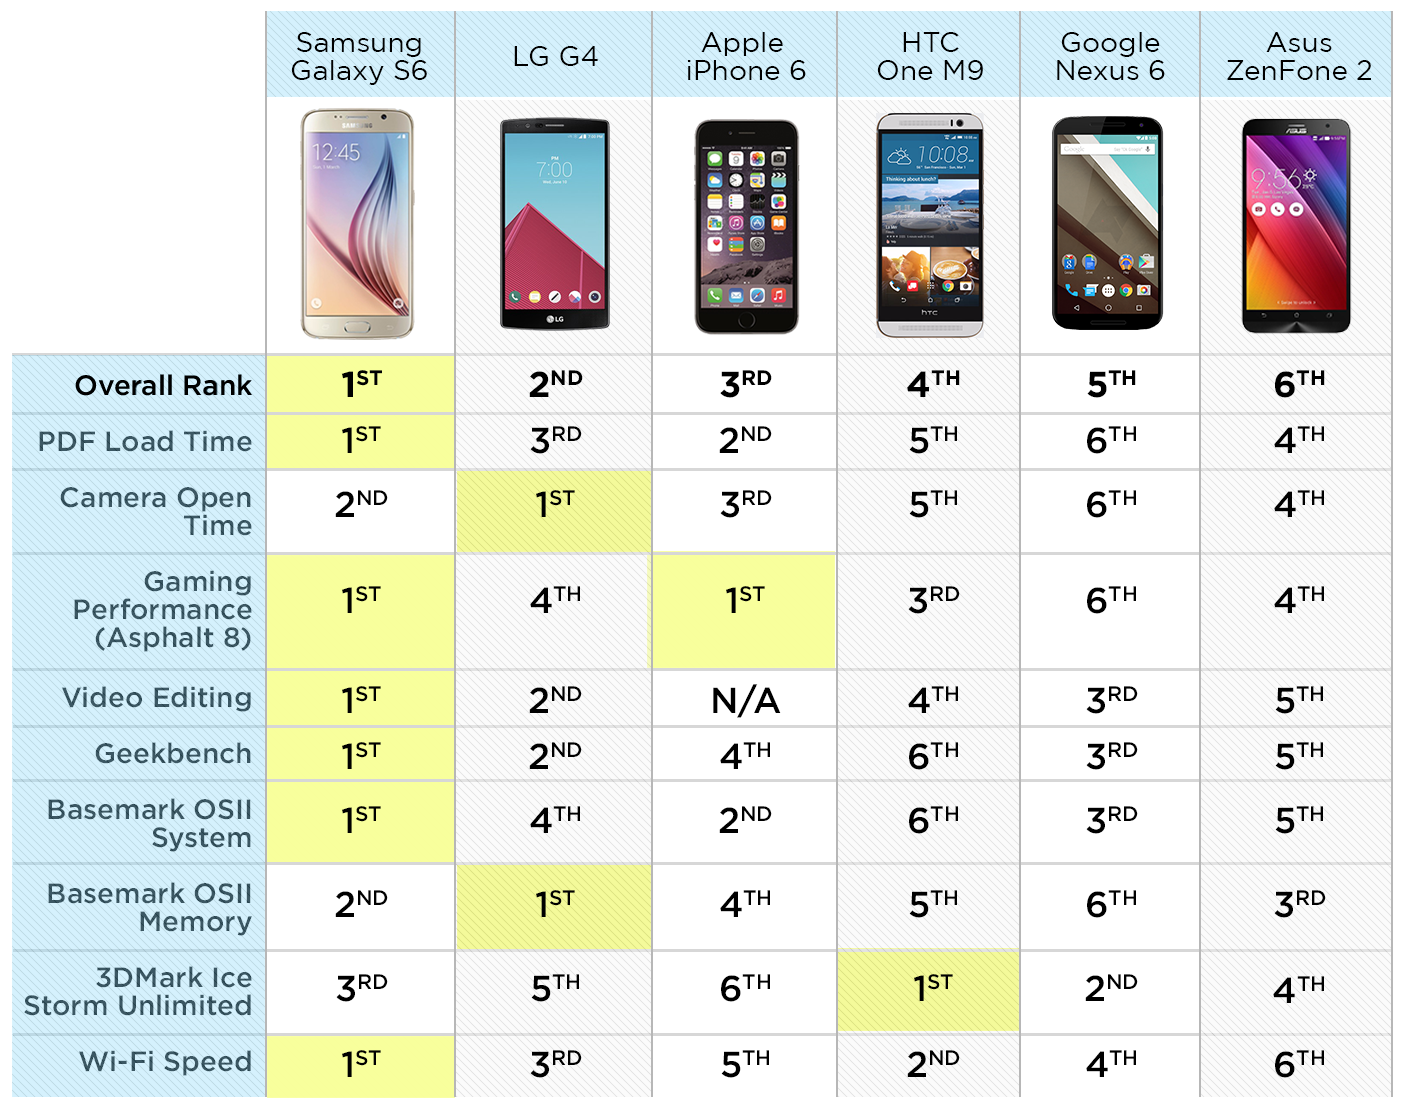 Galaxy S6 ครองแชมป์ "สมาร์ทโฟนที่เร็วที่สุด" ตามด้วย LG G4 และ iPhone 6